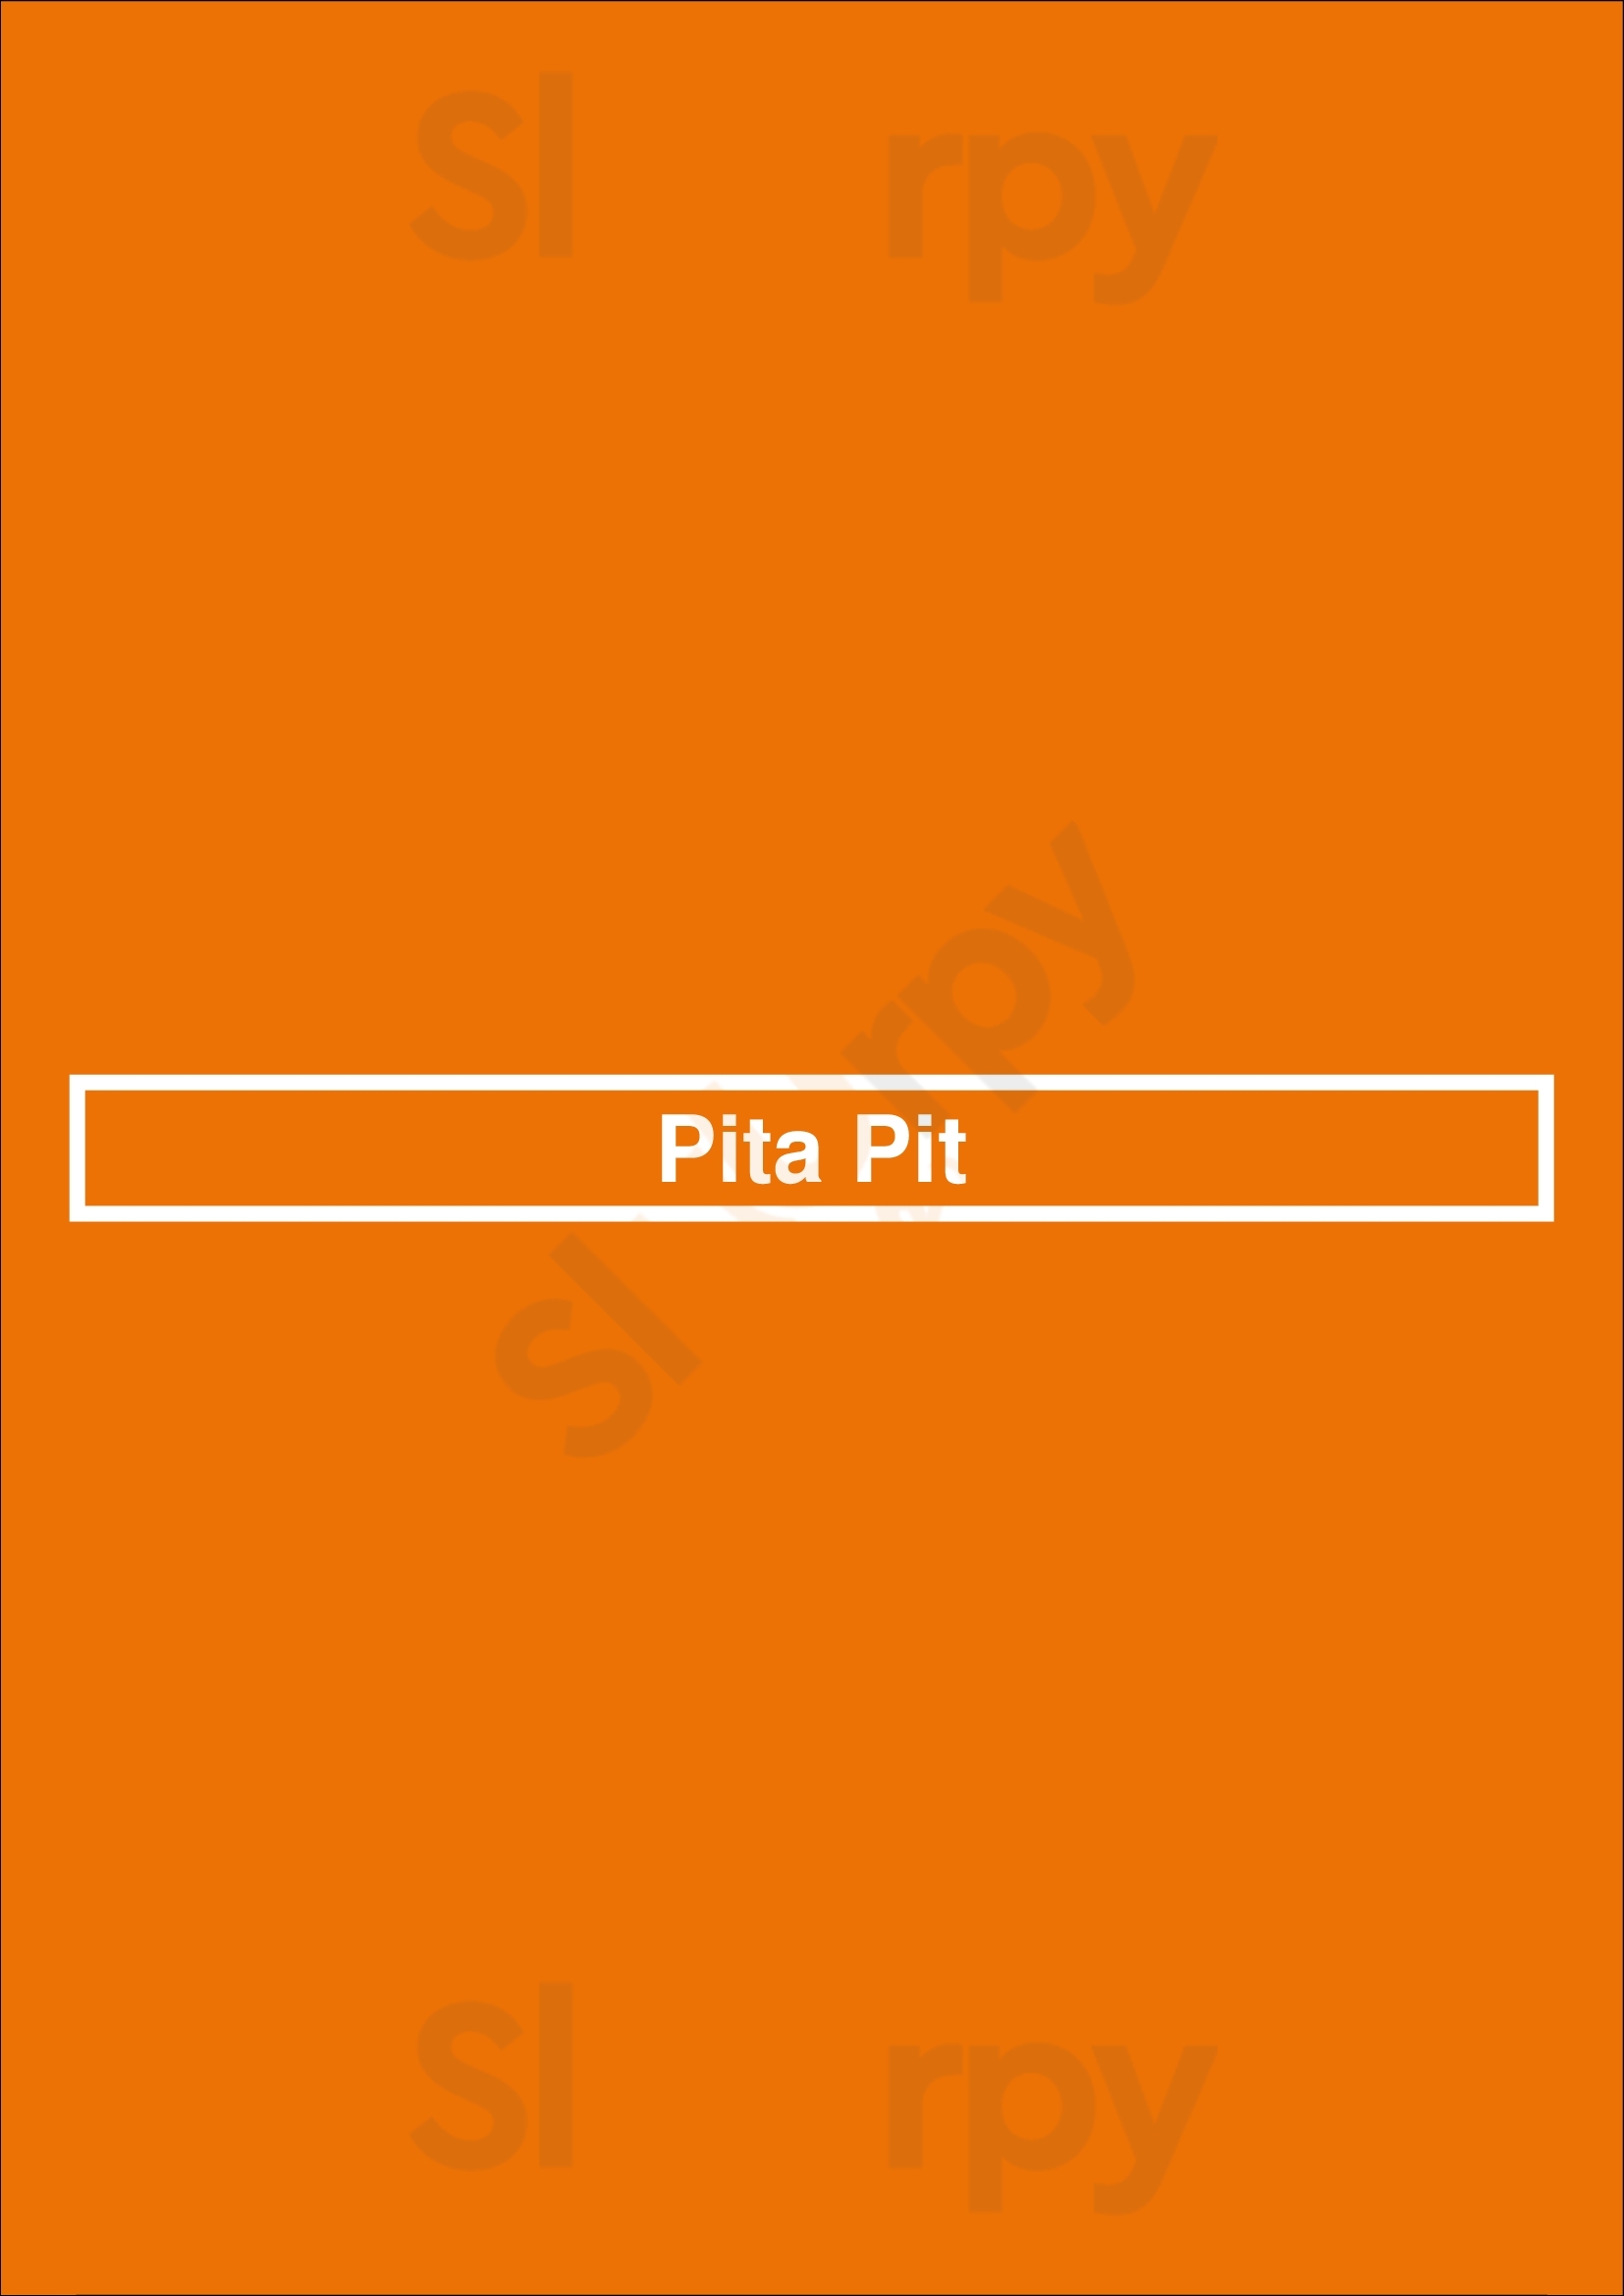 Pita Pit Dartmouth Menu - 1